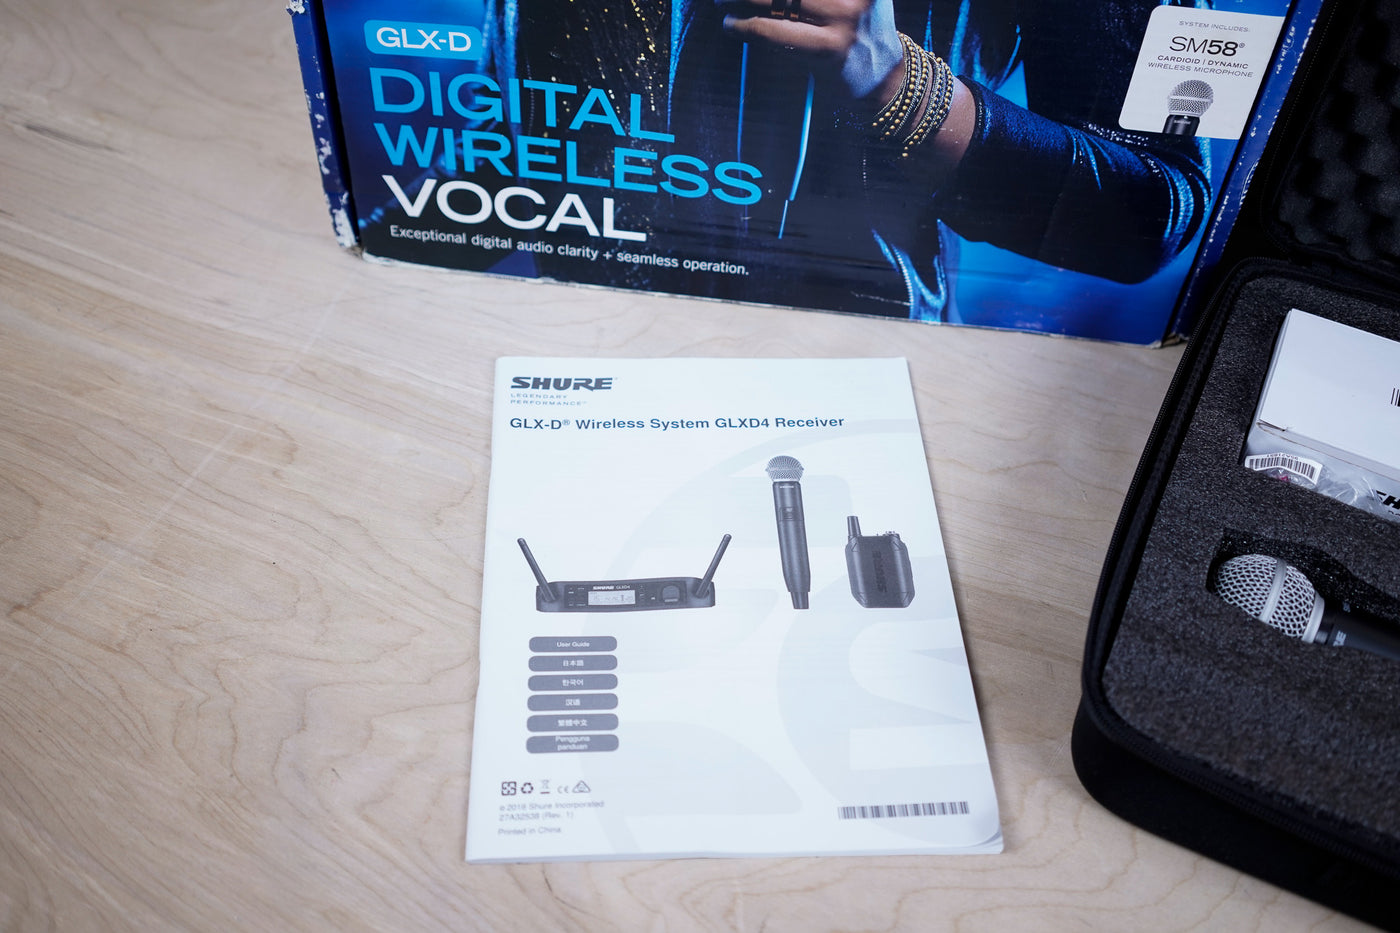 Shure GLX-D Digital Wireless Vocal System (SM58)